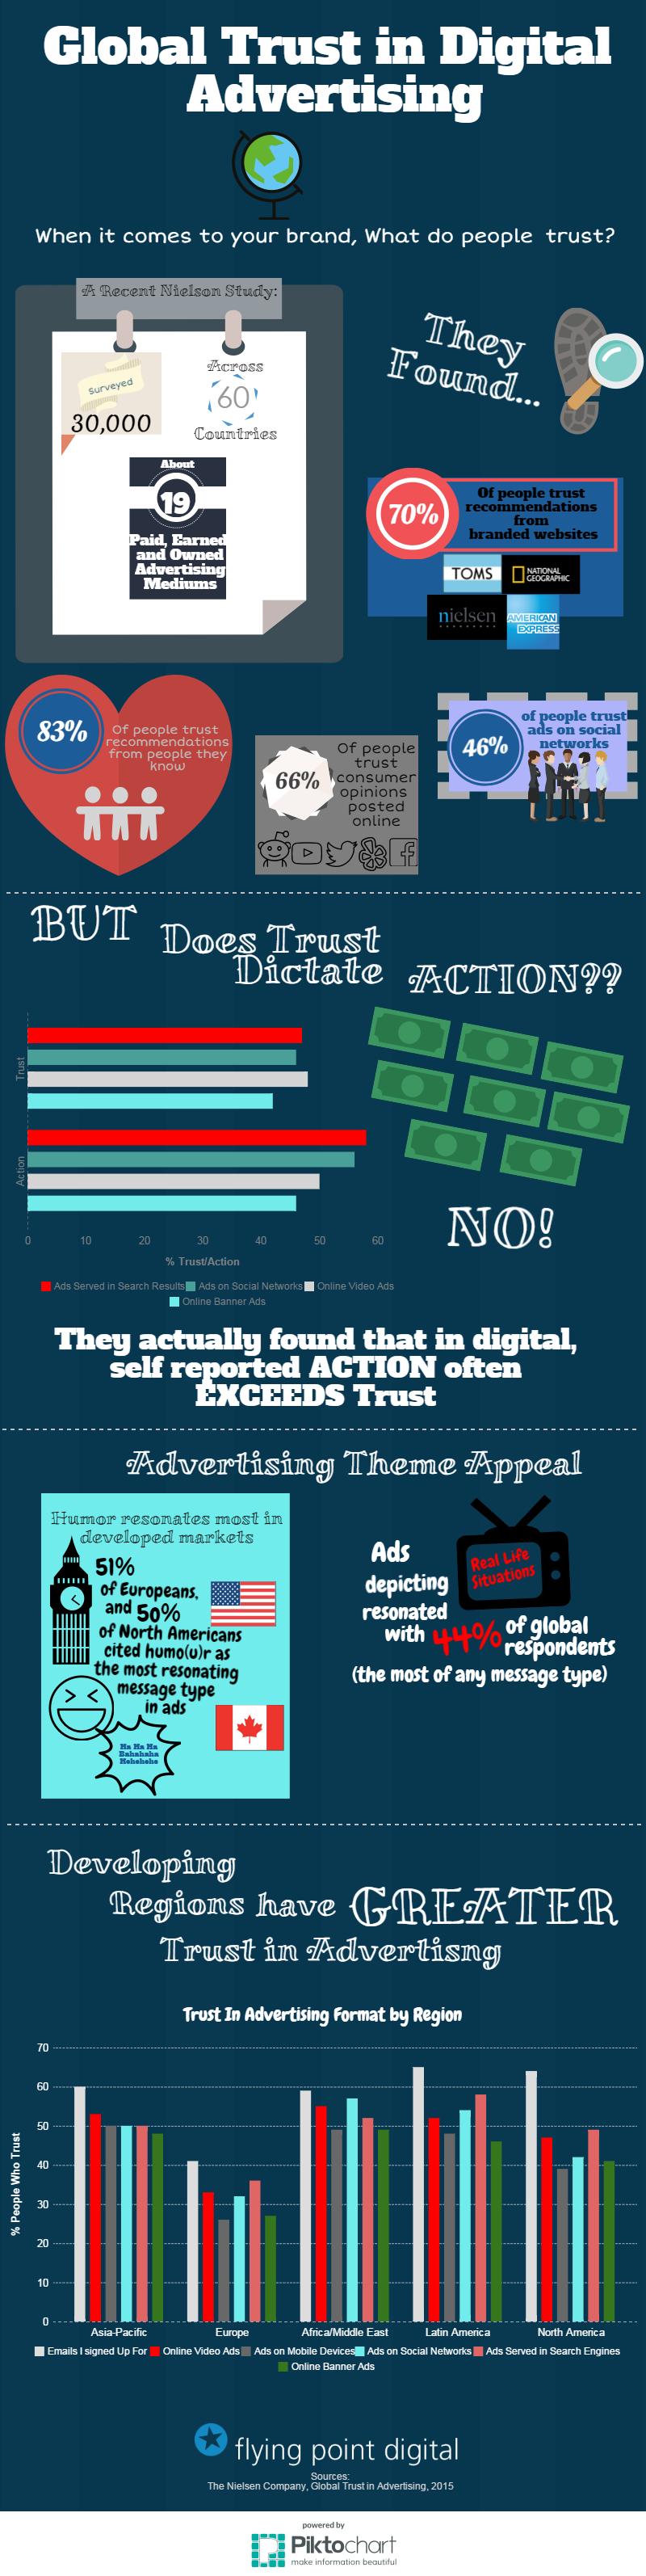 2015 Global Trust in Digital Advertising Trends infographic